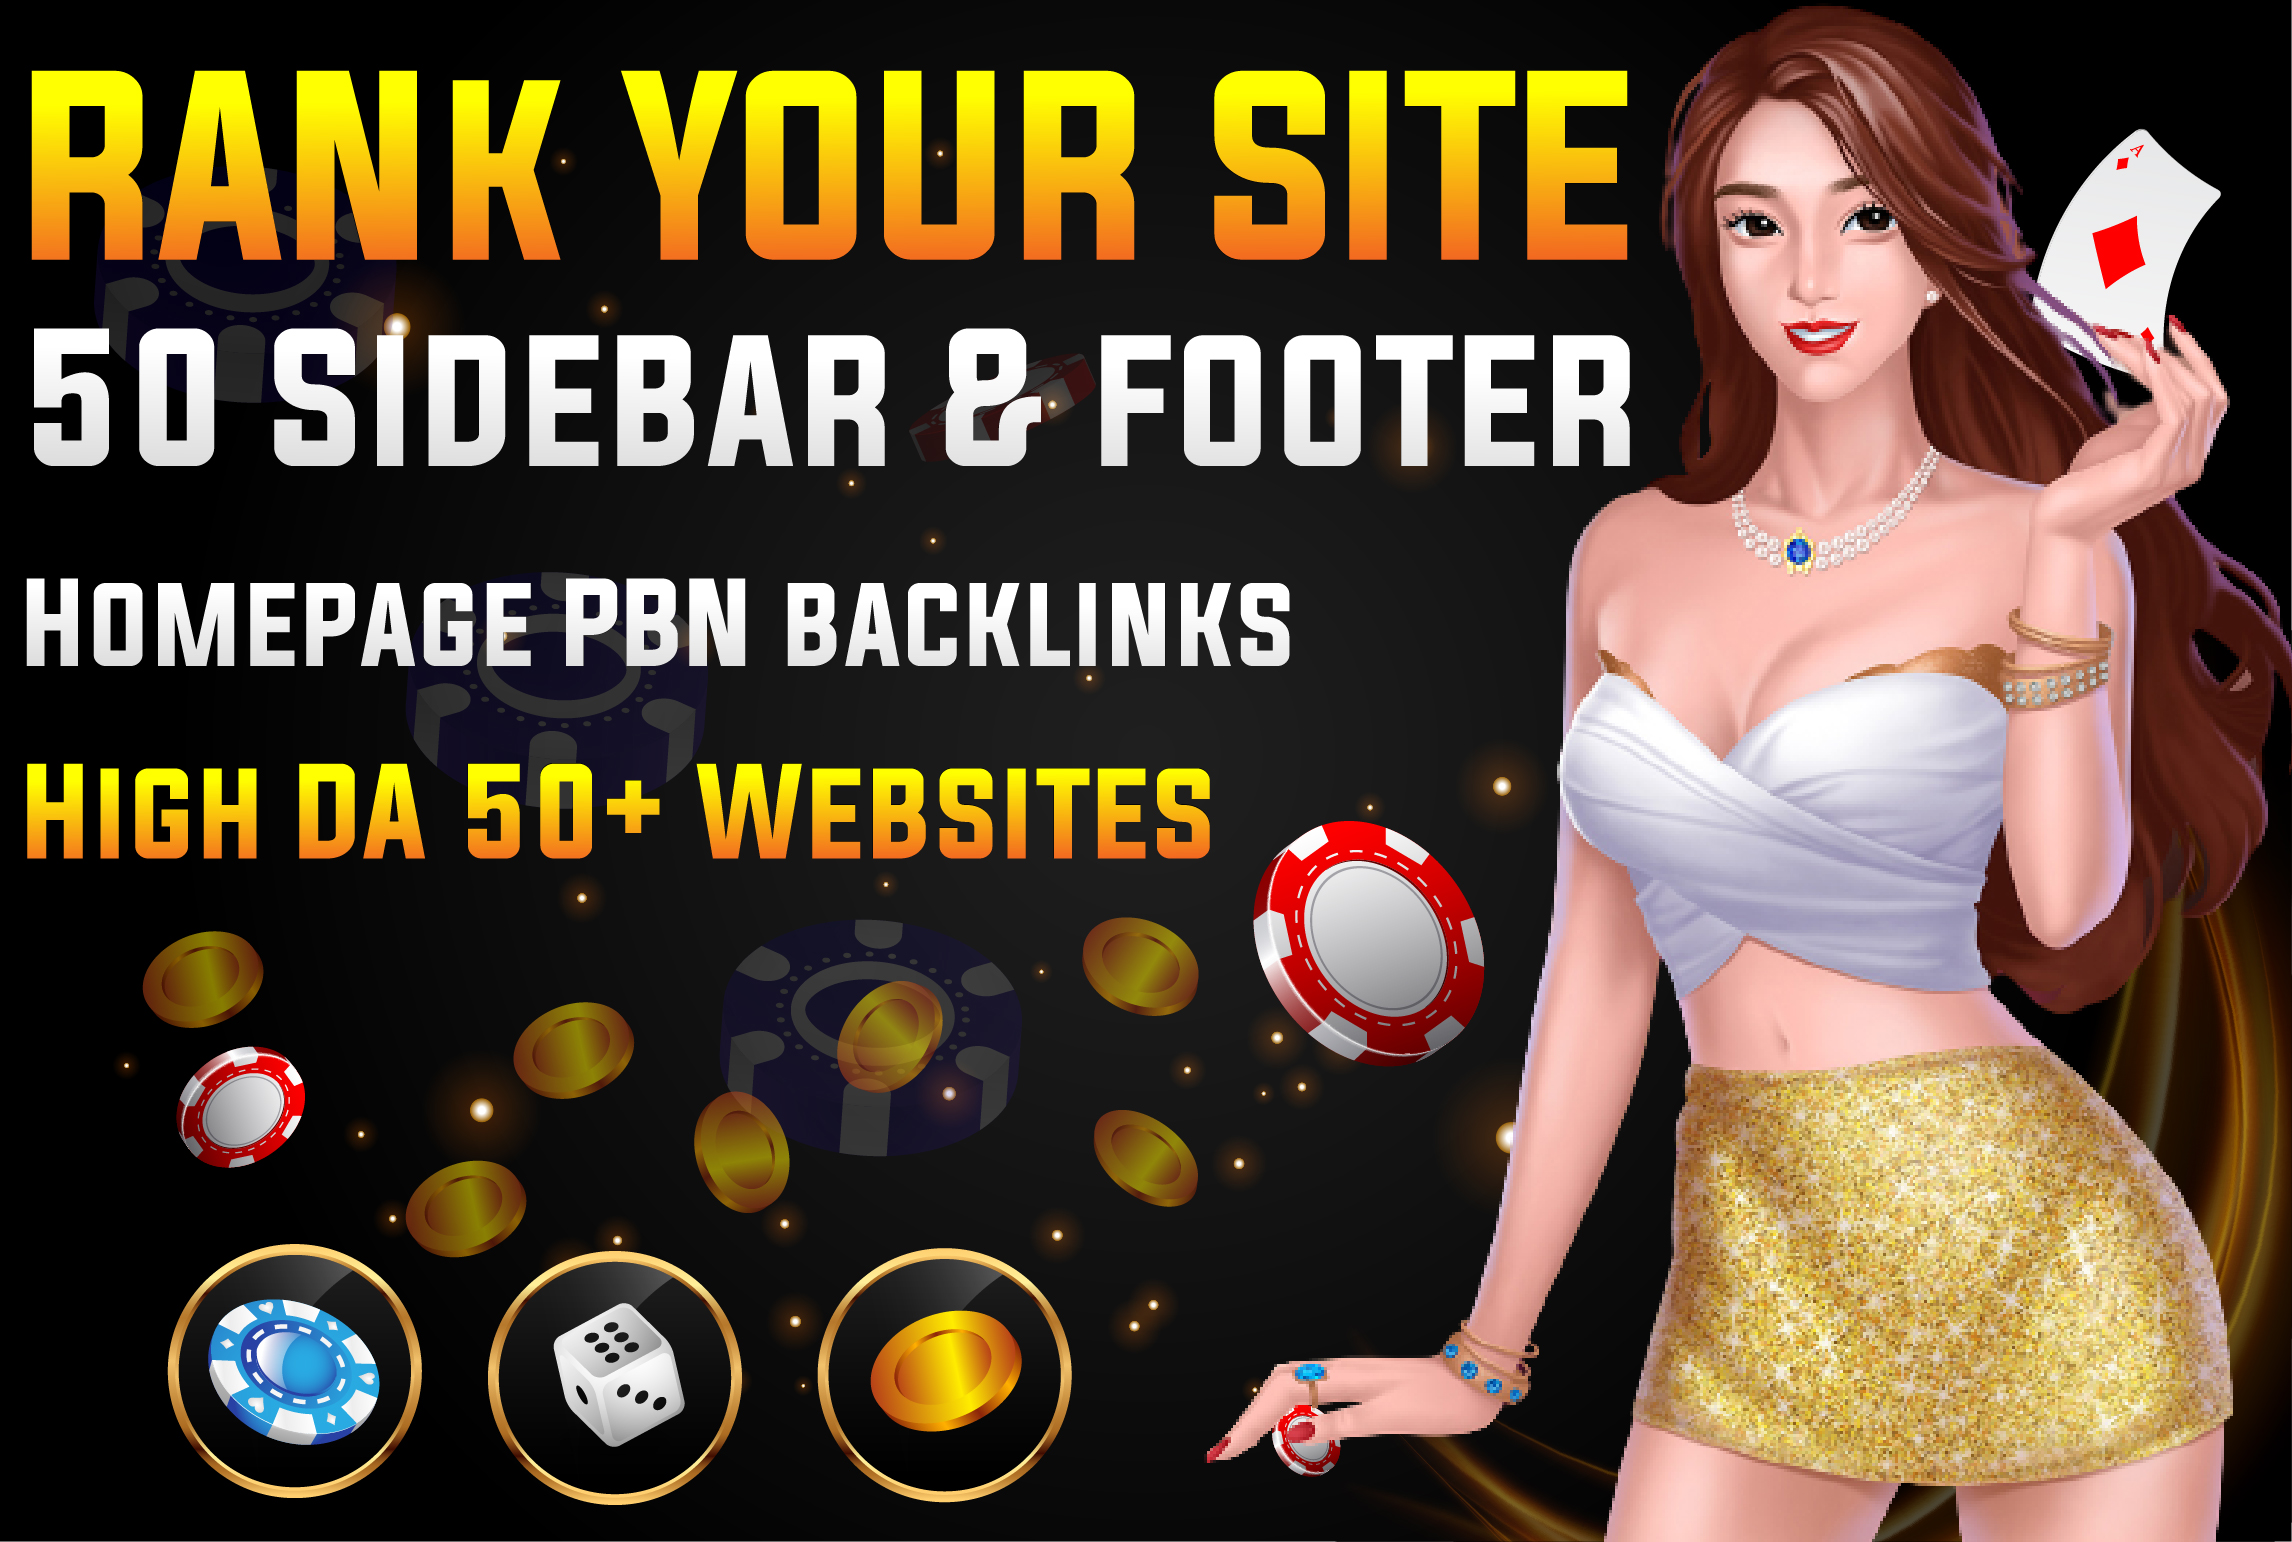 50 Permanent Sidebar-blogroll-footer PBN Backlinks - DA 50+ Dofollow Websites